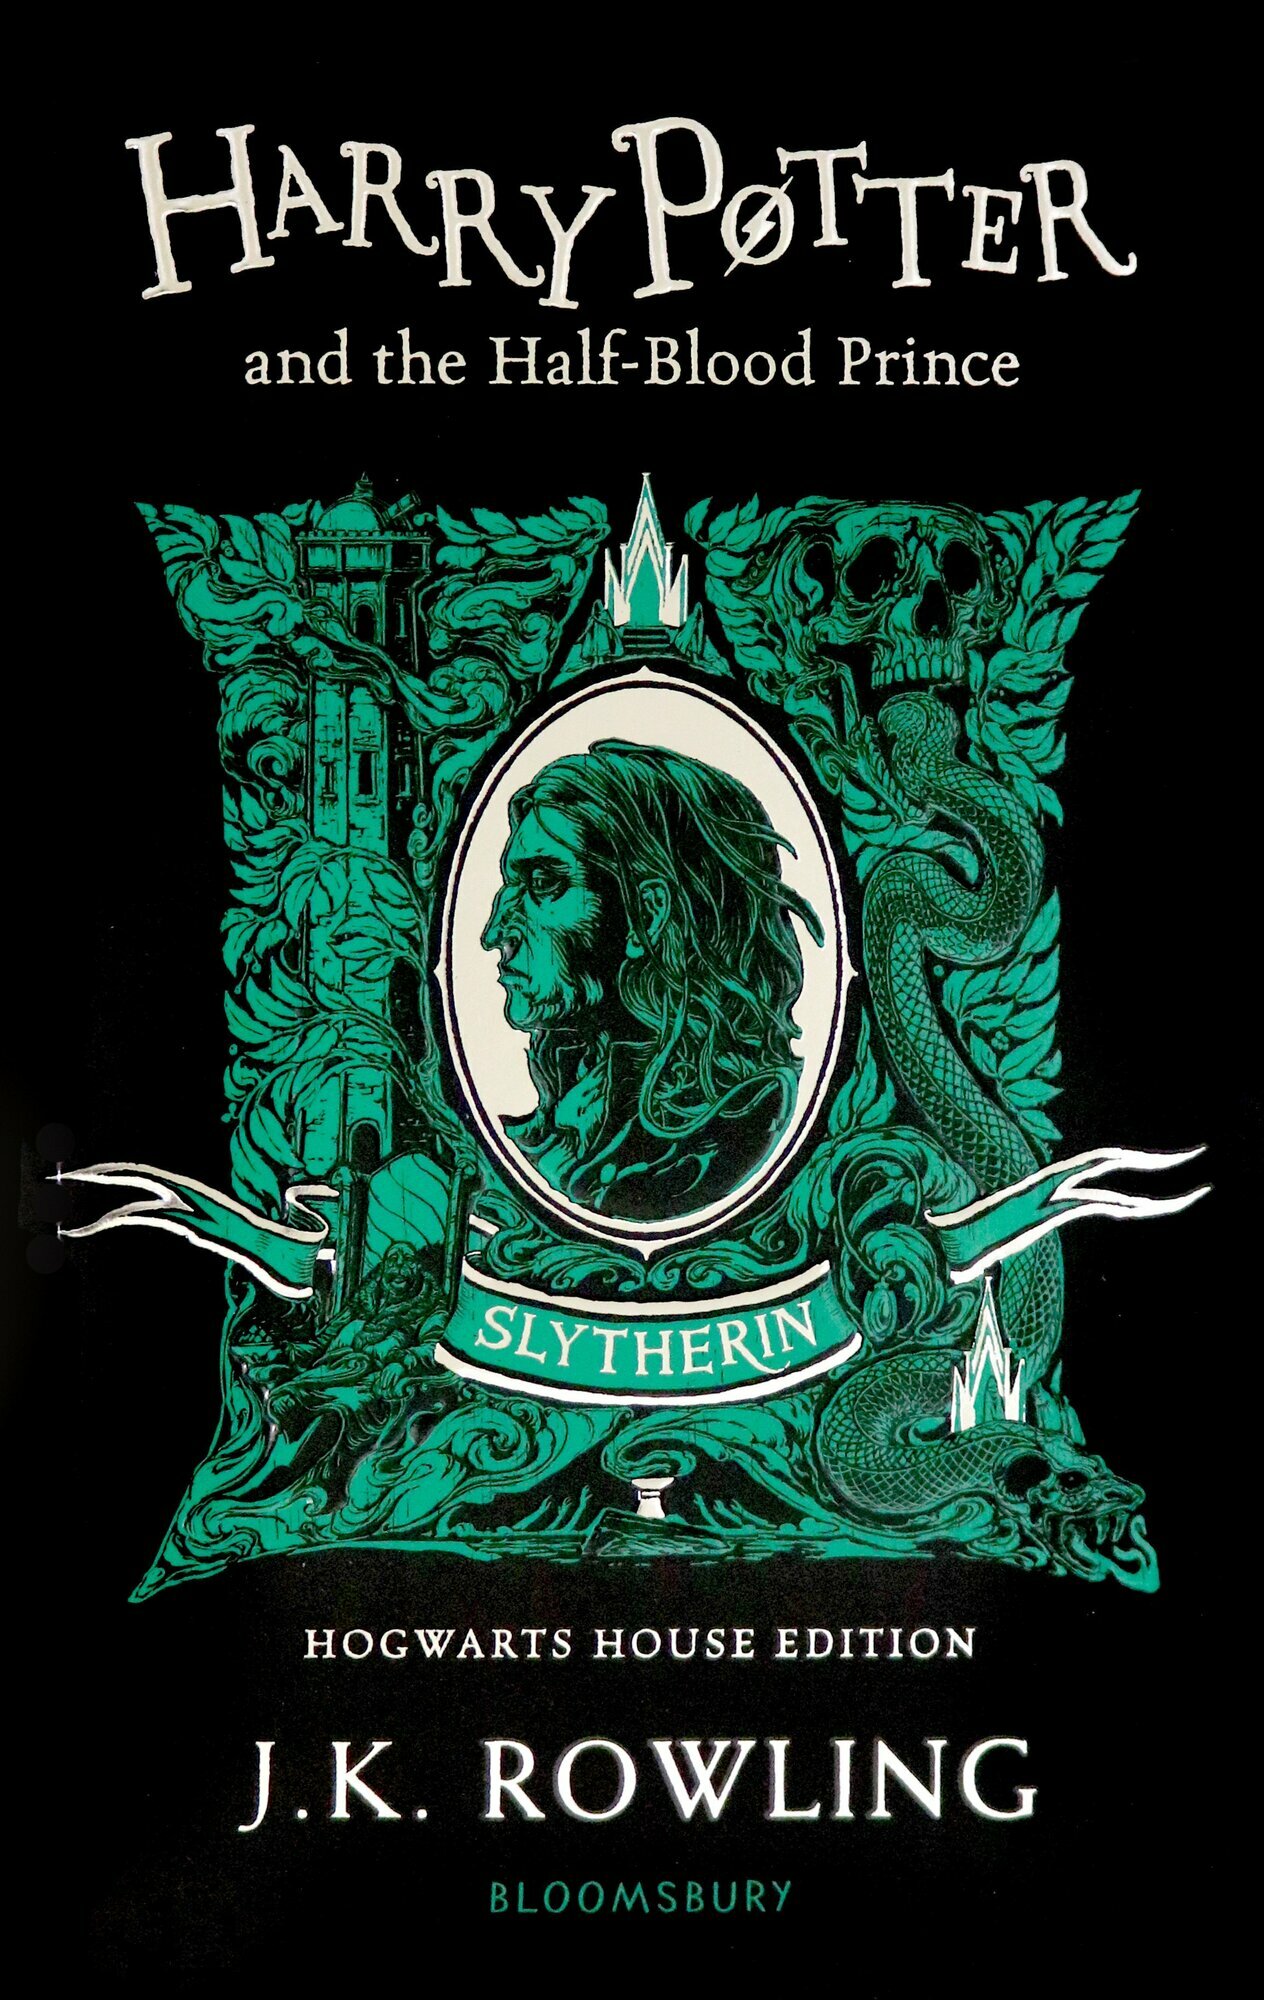 Harry Potter Slytherin House Editions Paperback Box Set комплект из 7 книг - фото №4